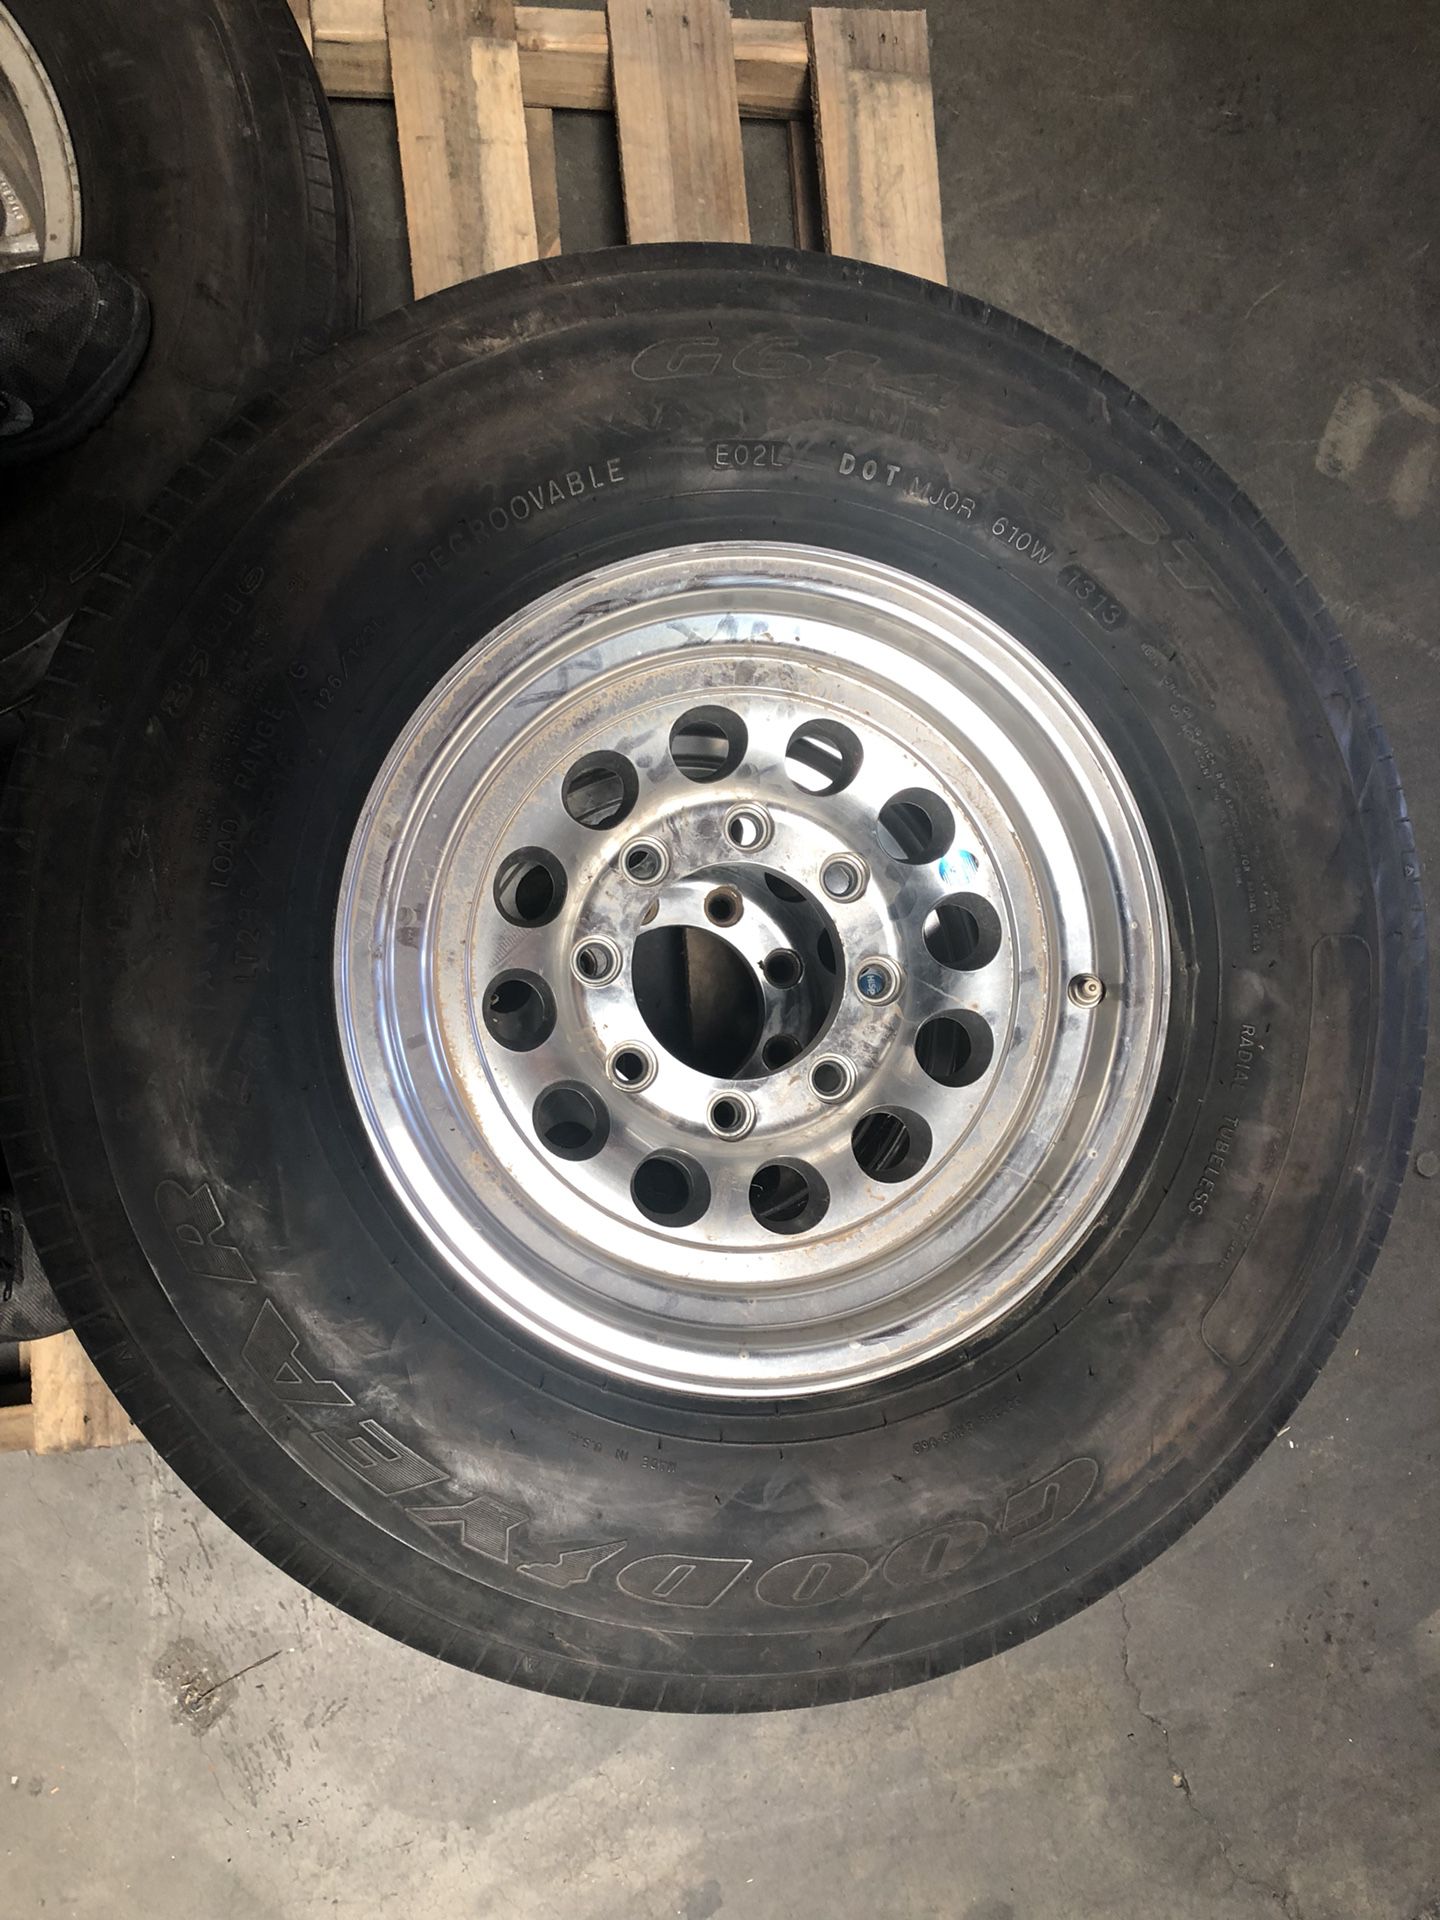 Goodyear G614 trailer tires on aluminum rims